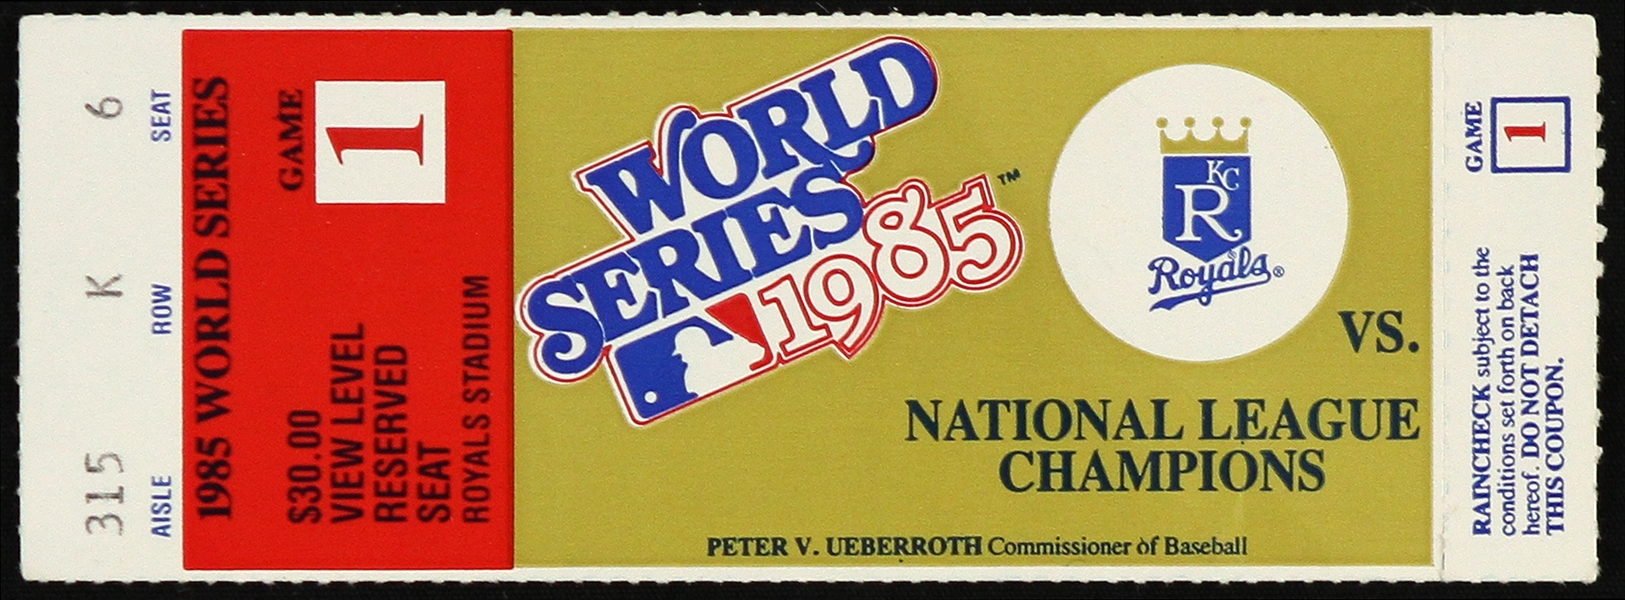 1985 Kansas City Royals vs National League Champions World Series Ticket 